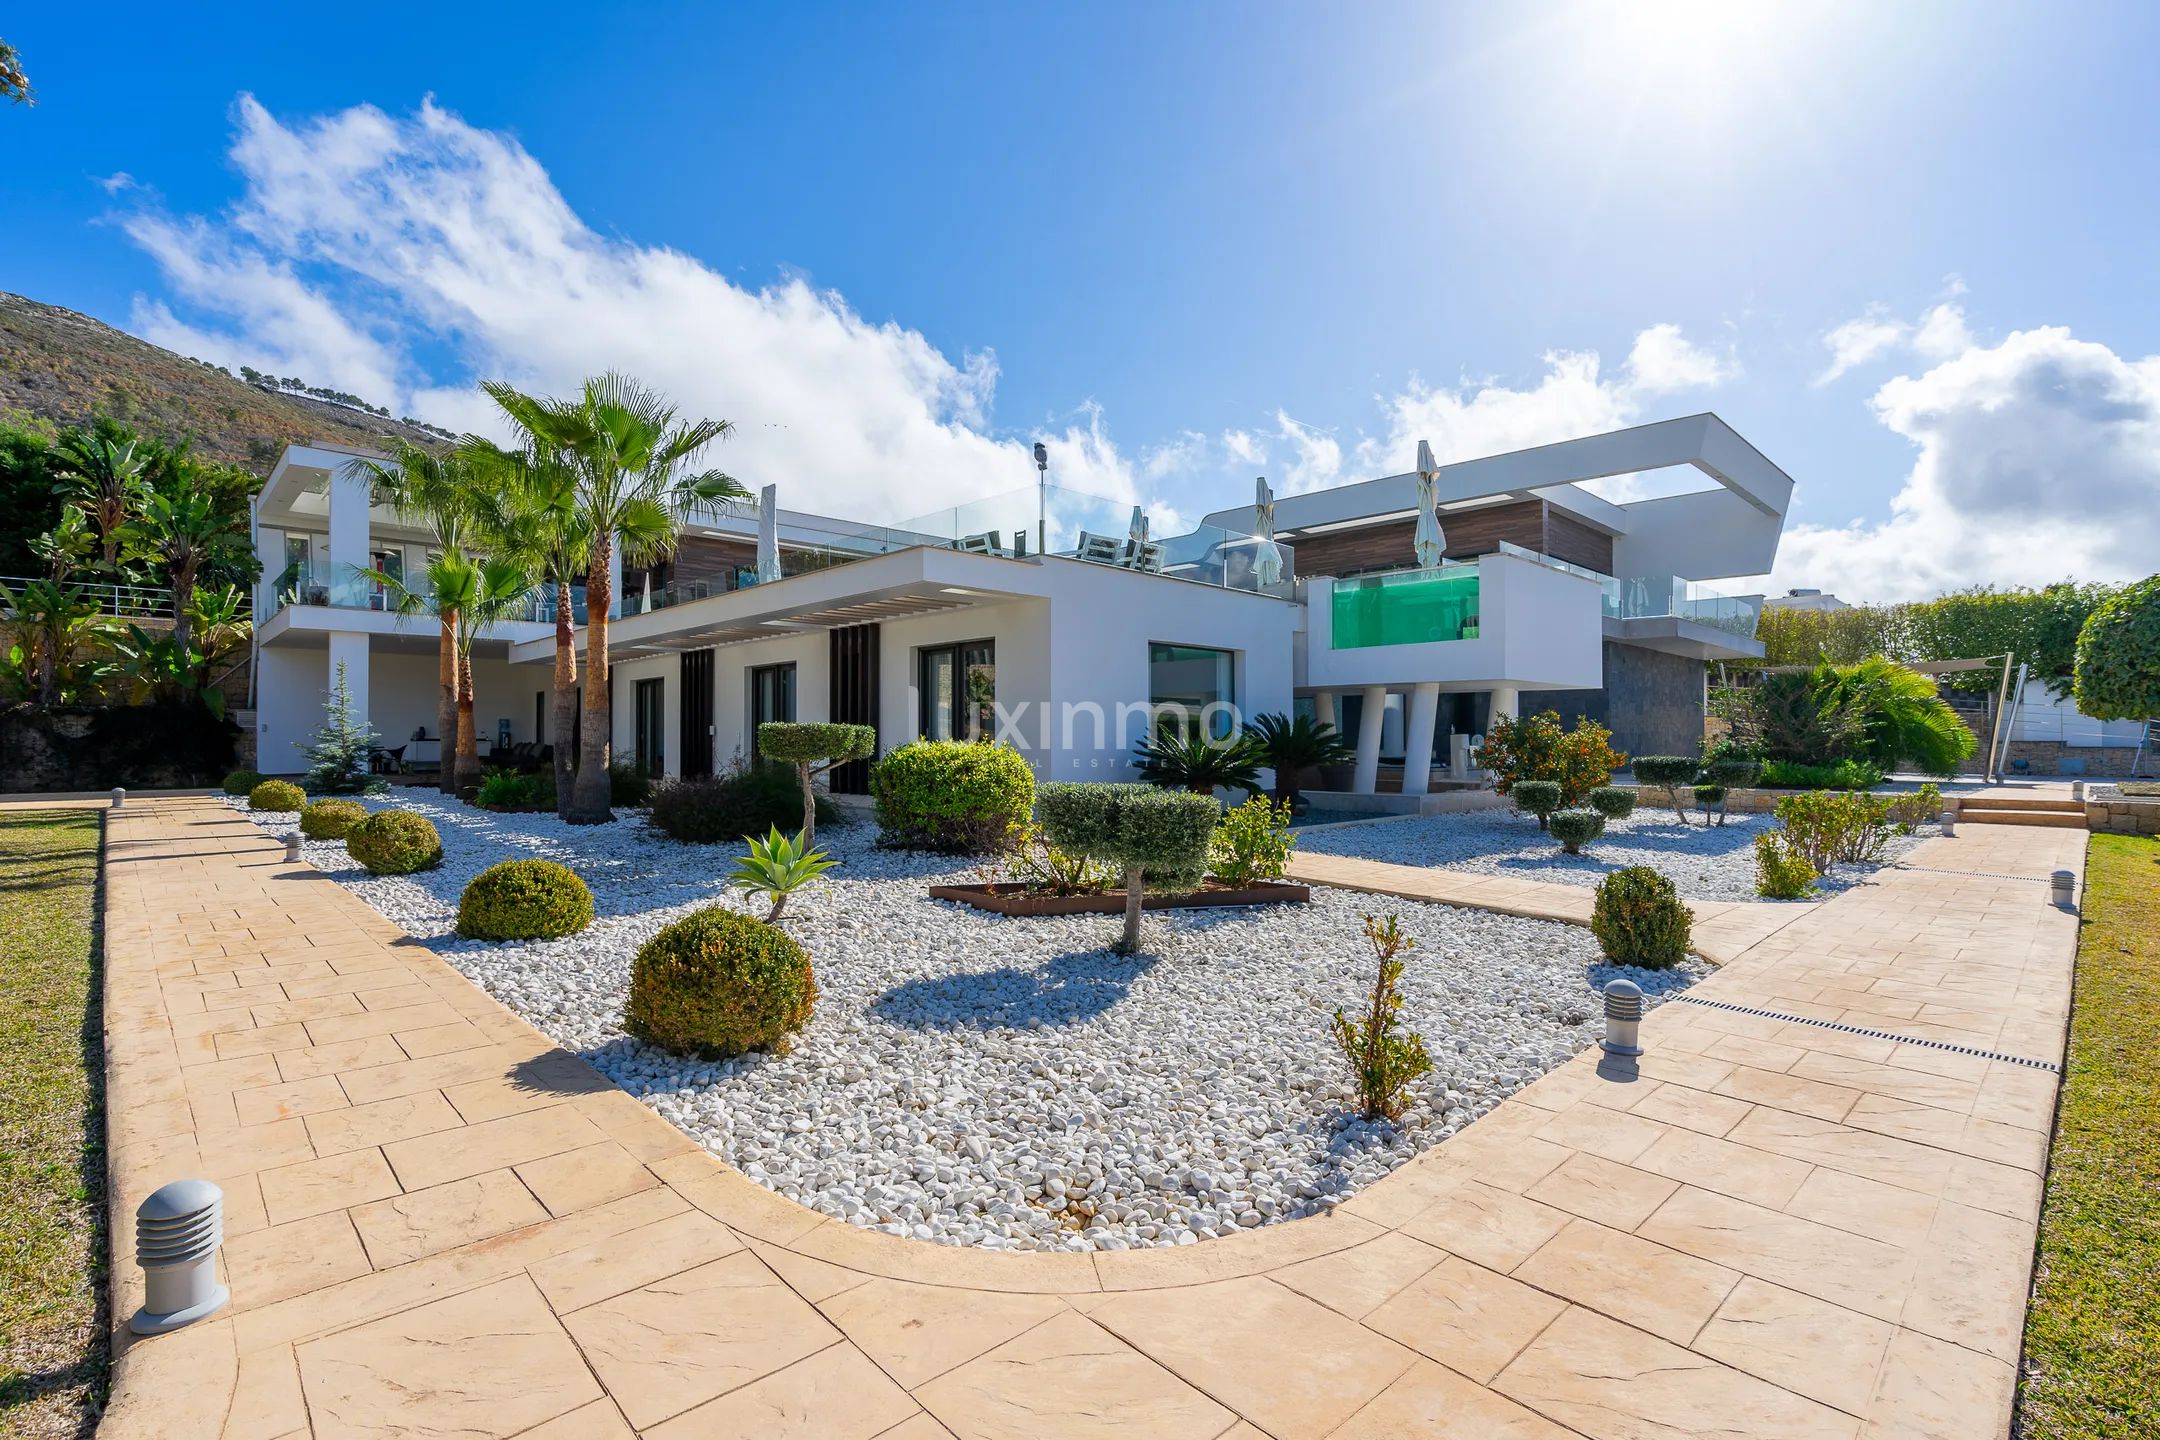 Luxury 6-Bedroom Villa with Sea Views in Cansalades